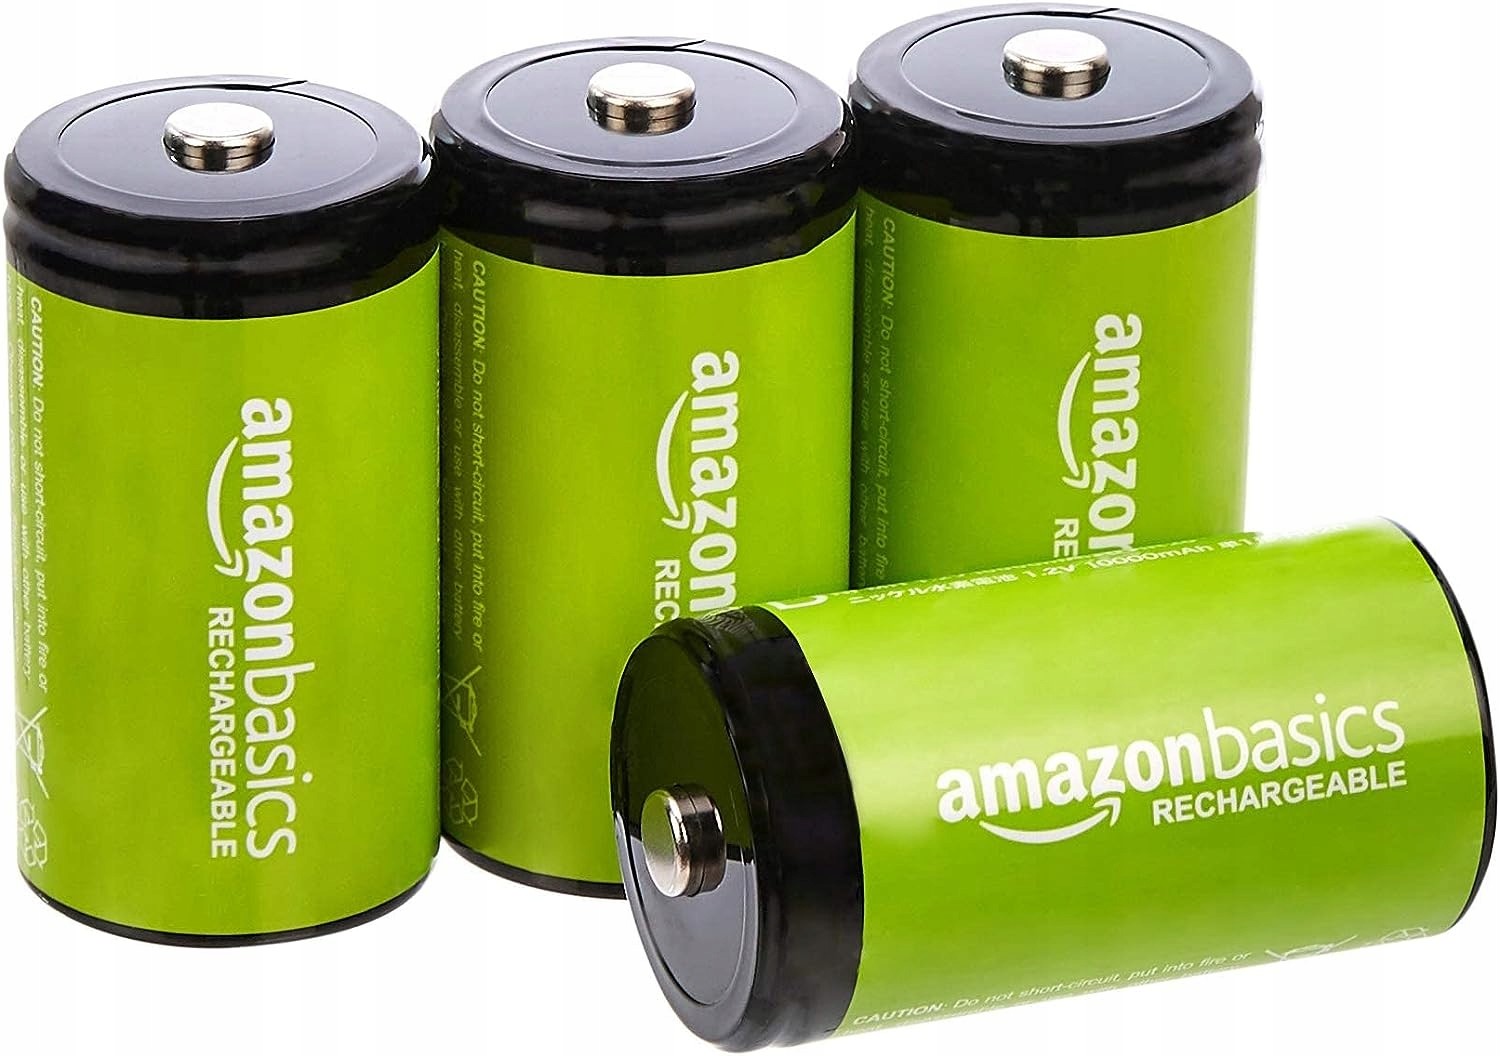 Baterie D Amazon Basic 10000 mAh 4 ks A8C82